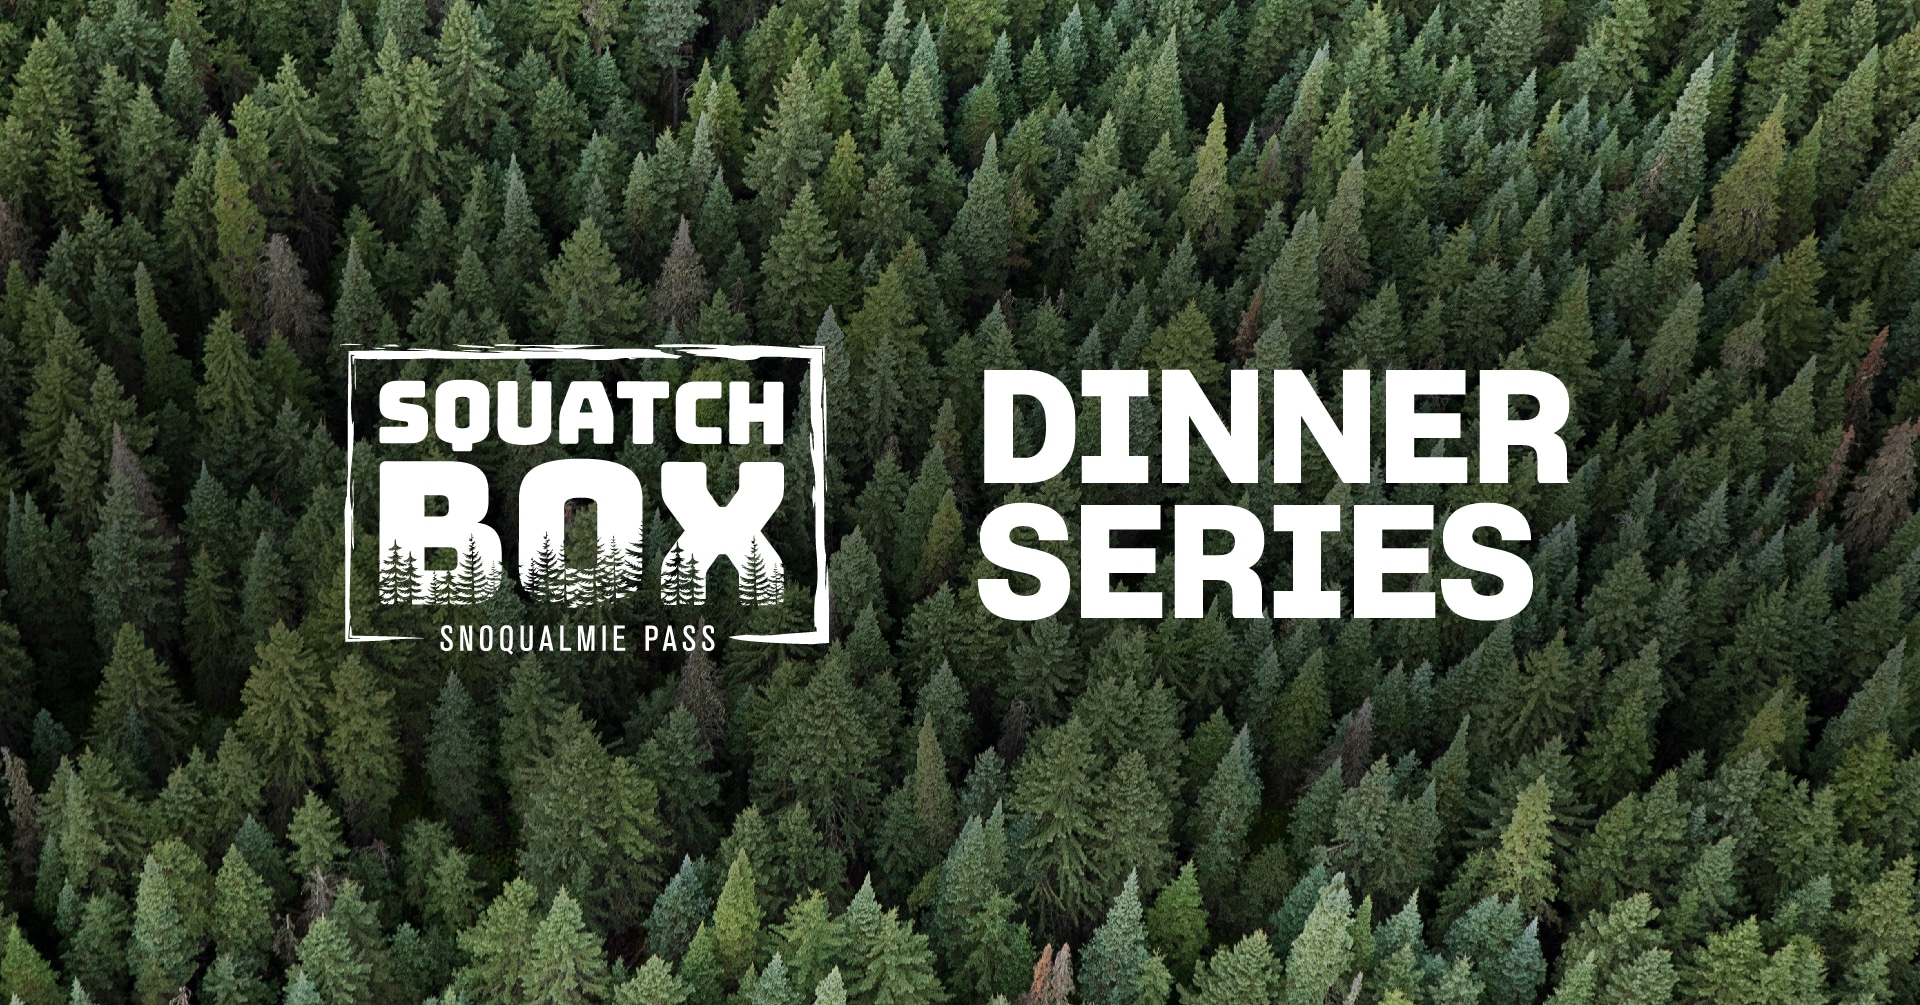 Prime Rib Dinner by Squatch Box